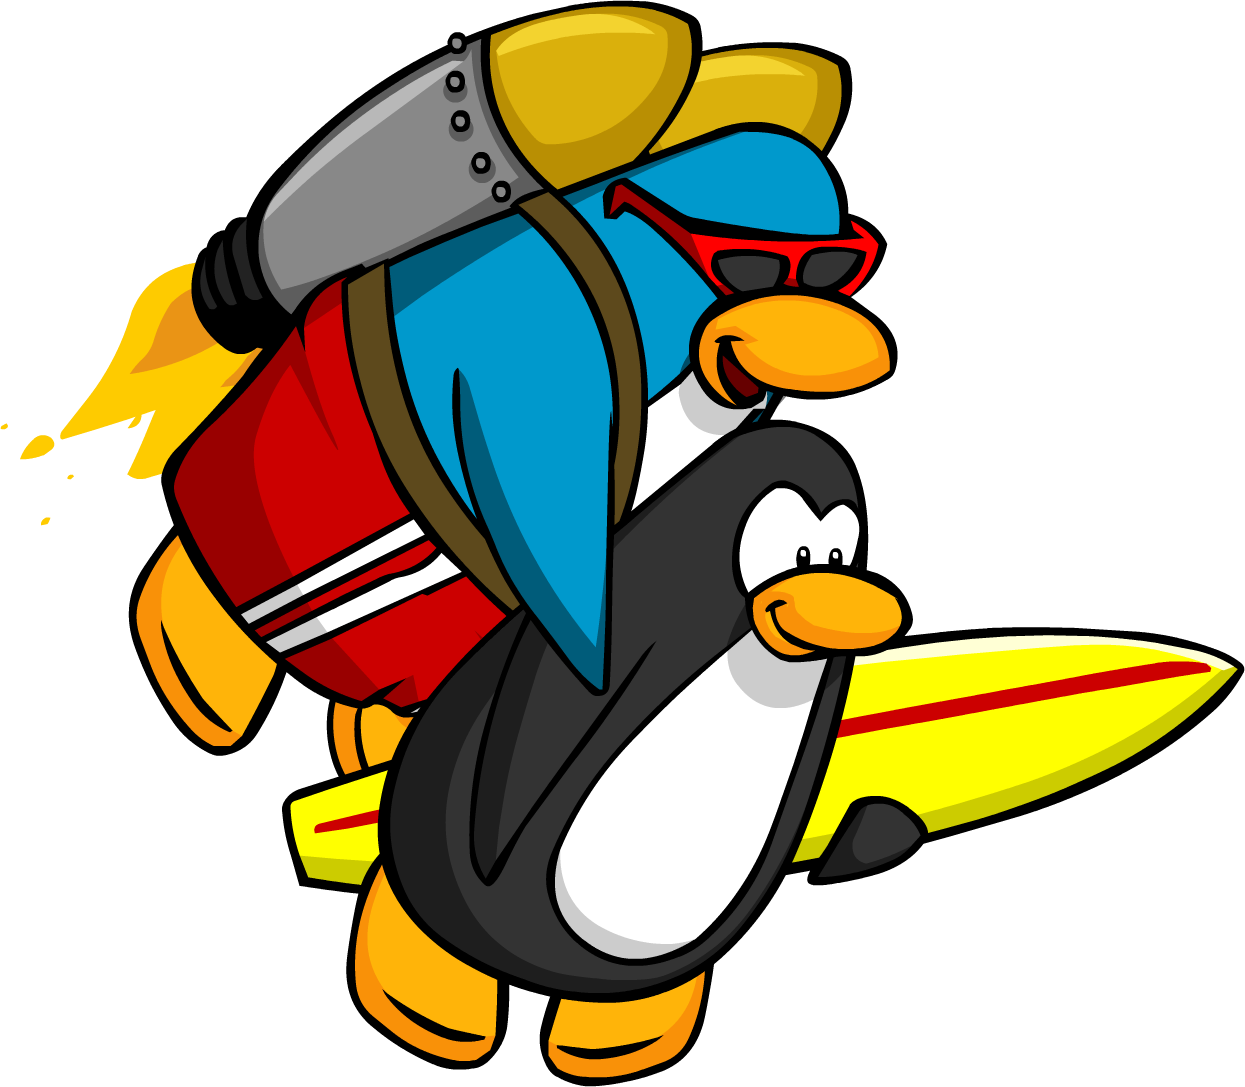 Catchin' Waves Jet Pack Surfer Carry - Club Penguin Jet Pack Surfer (1245x1087), Png Download